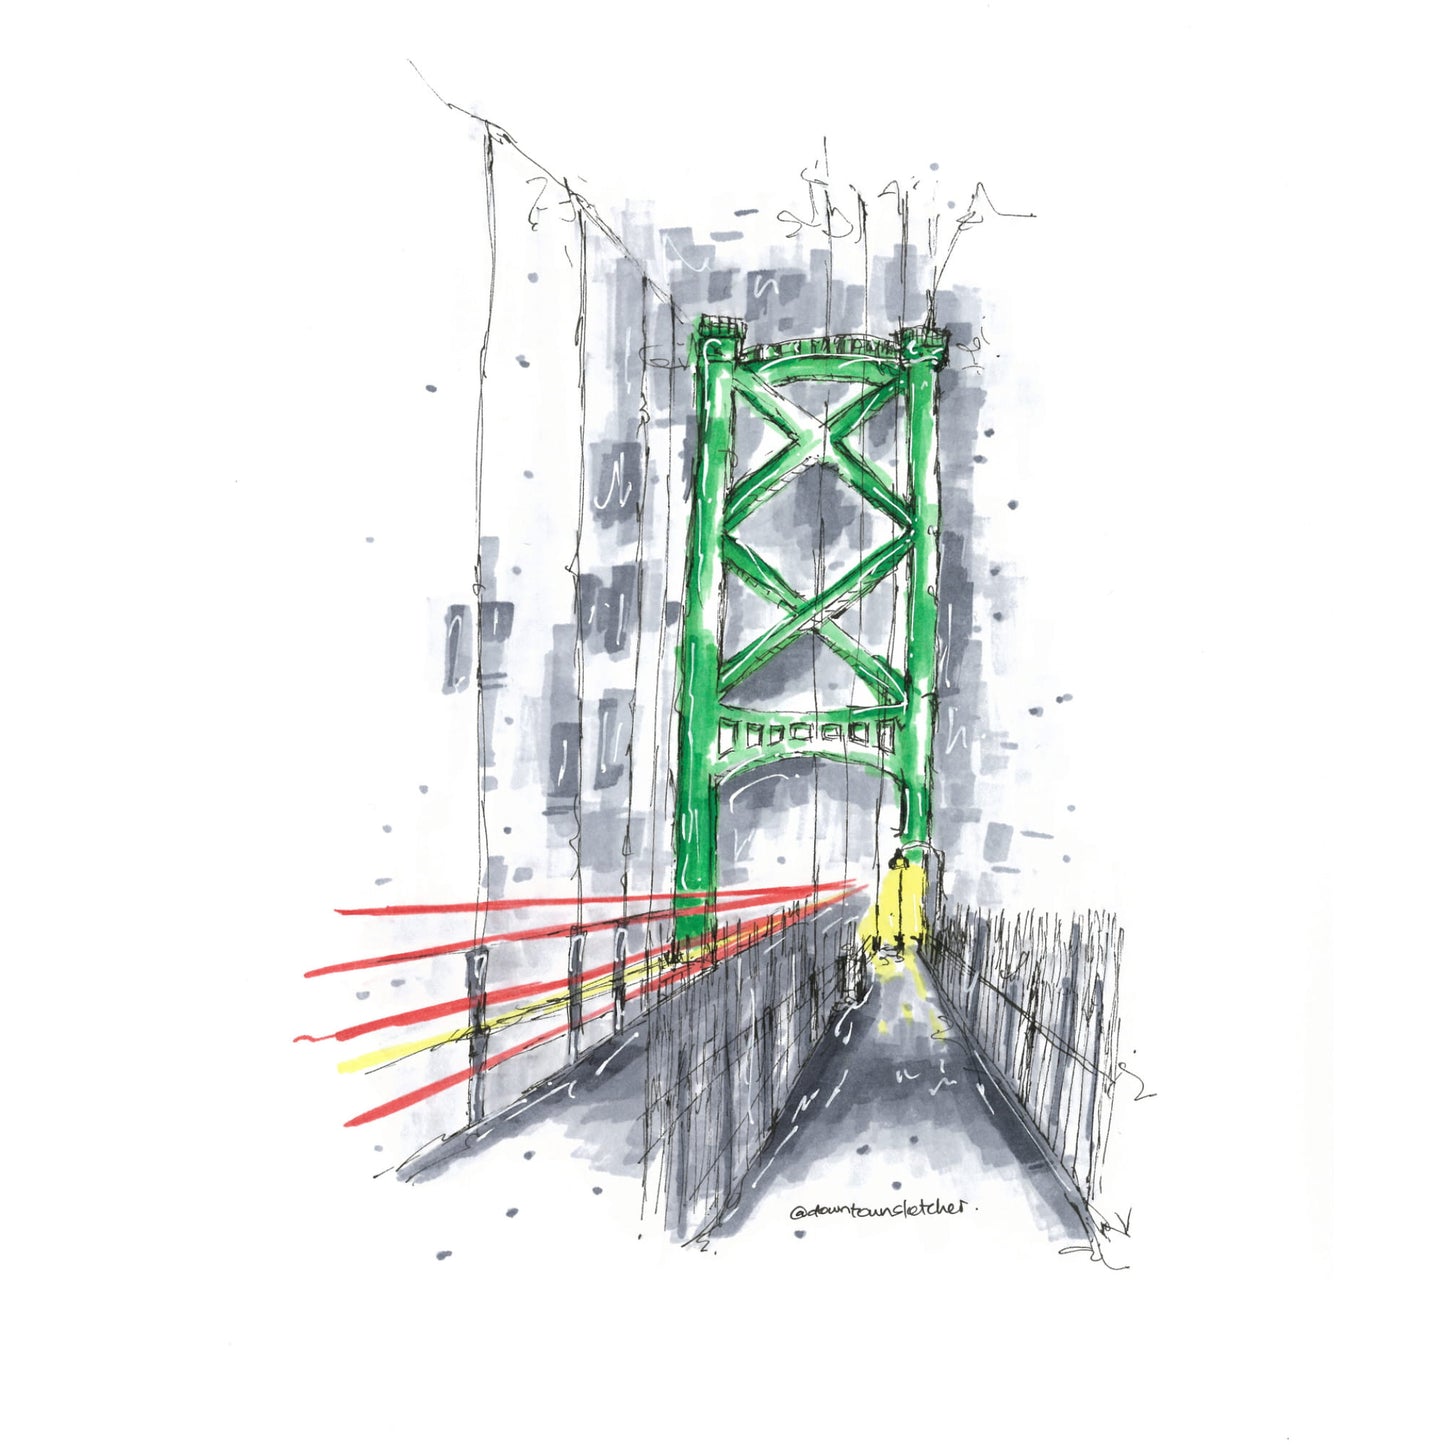 Macdonald Bridge Halifax - Artwork Print Sketch 2 - Downtown Sketcher